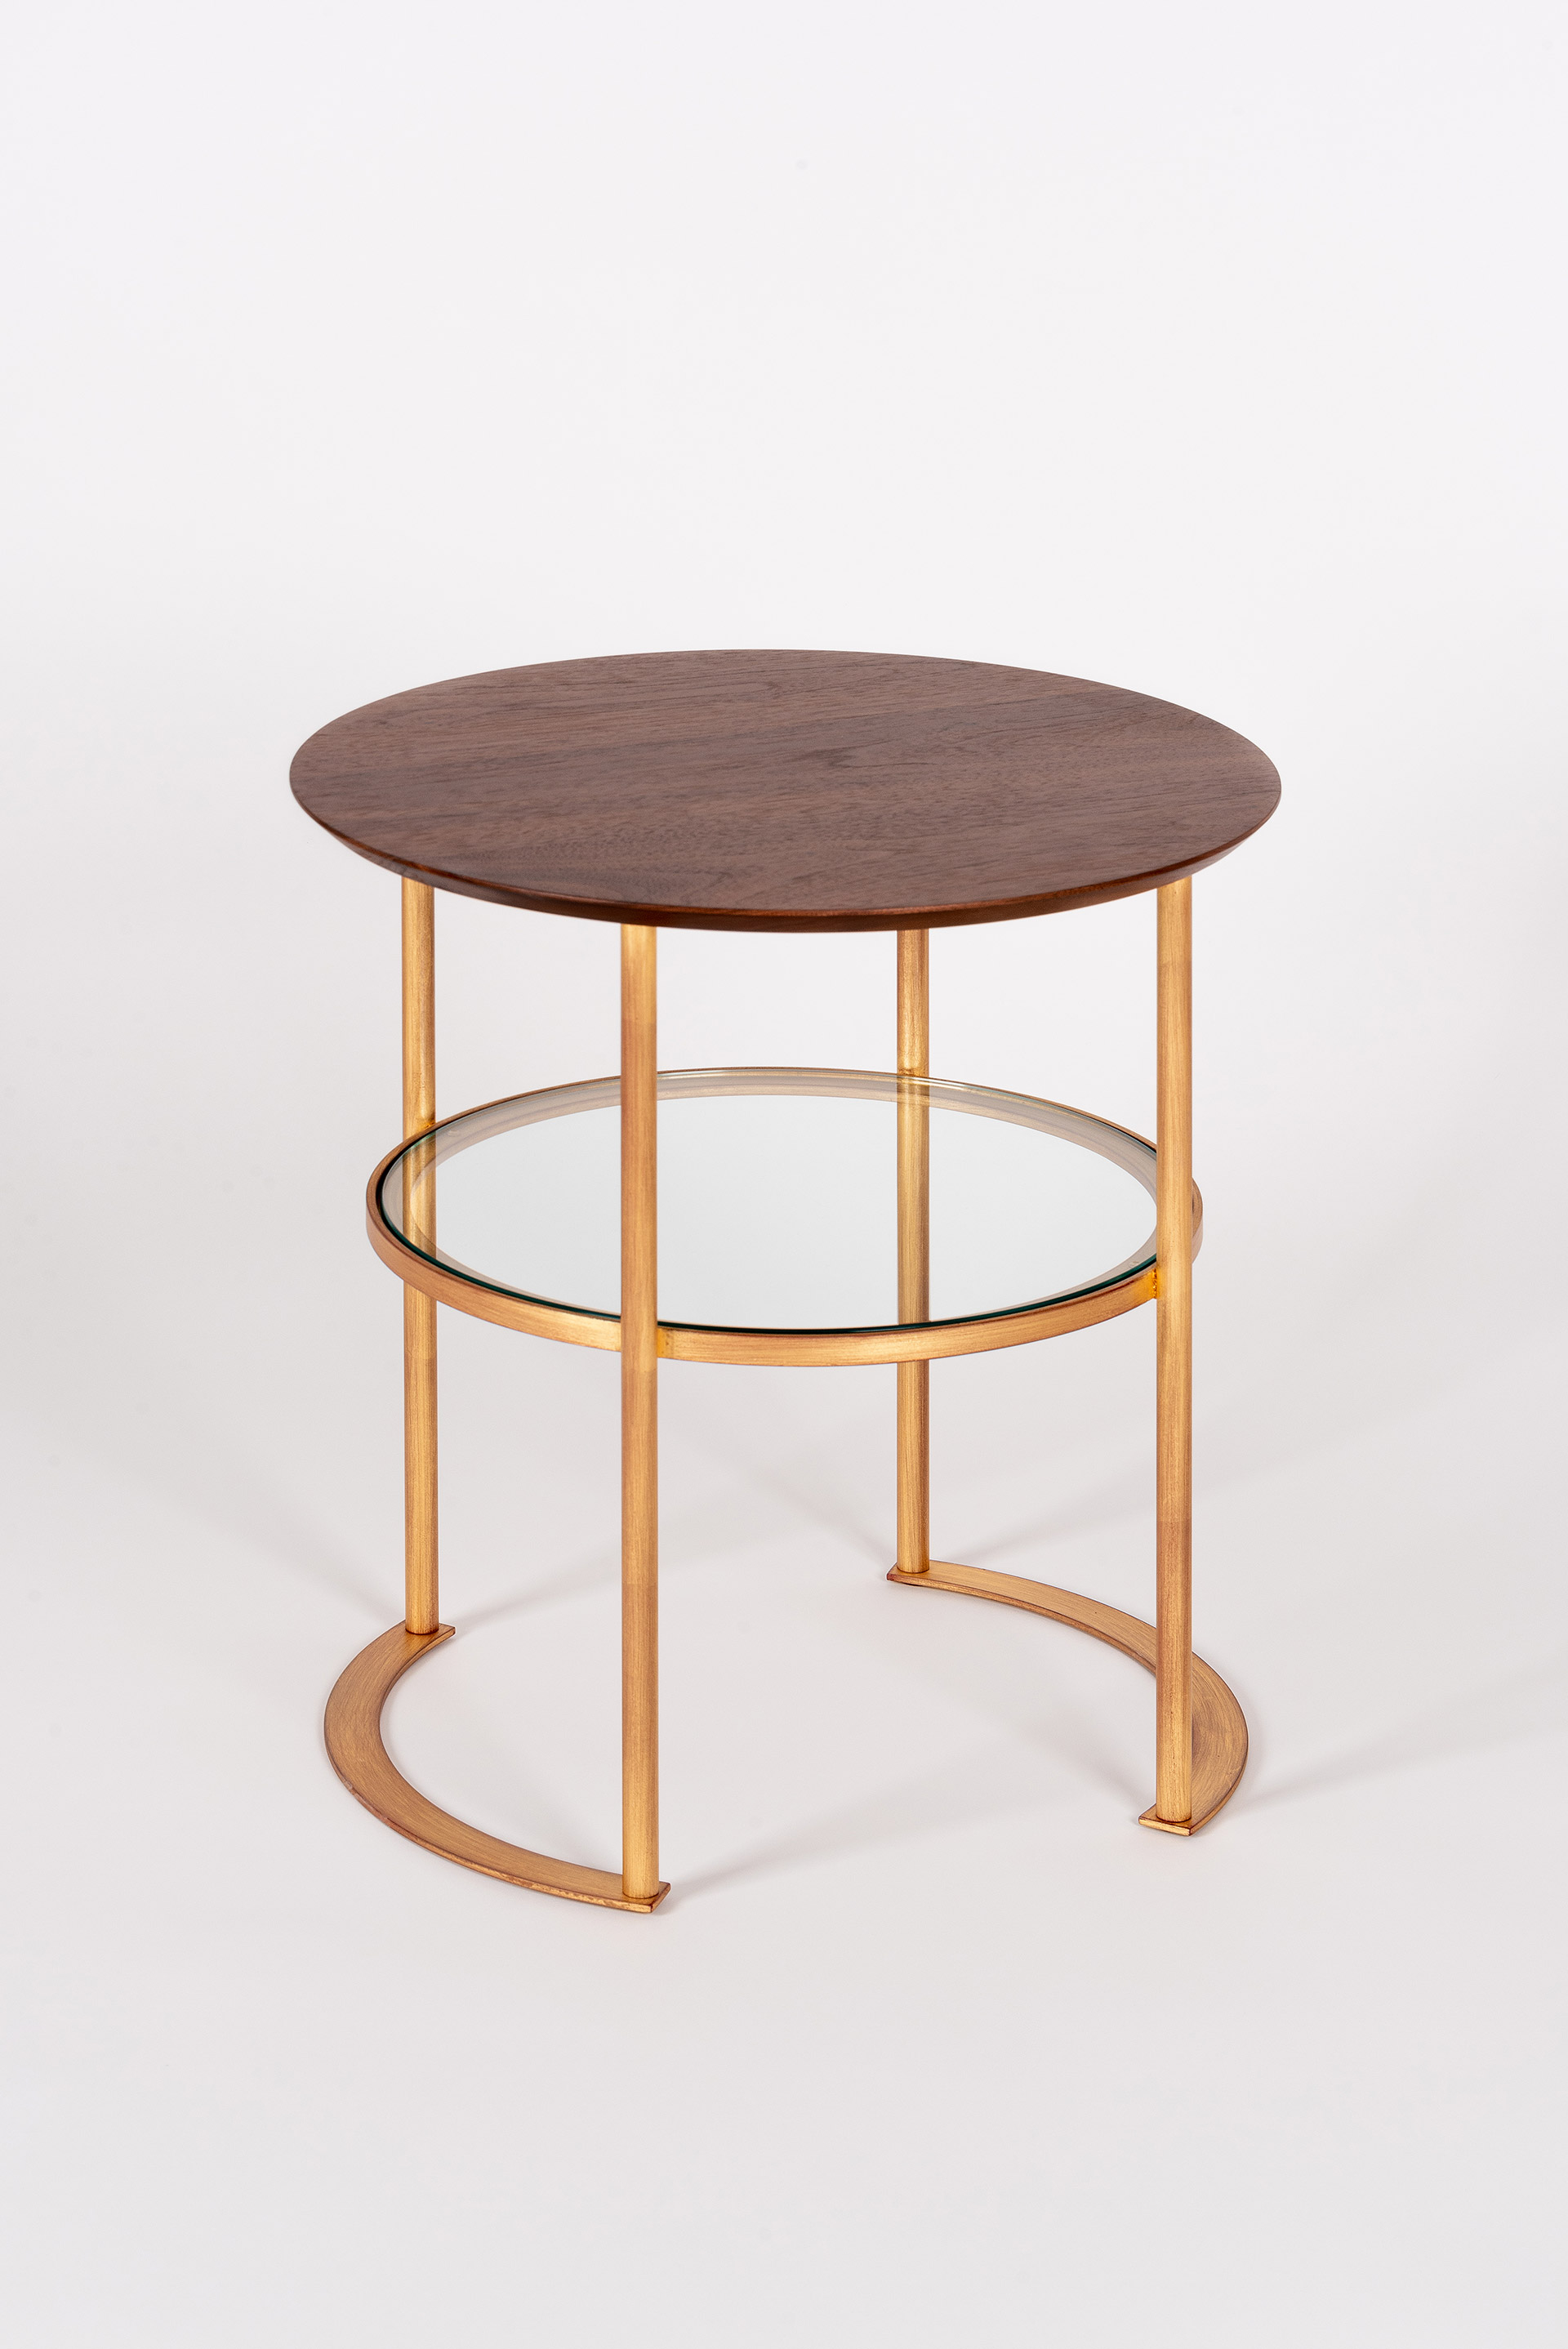 OCTANT Side Table by Borella Art Design